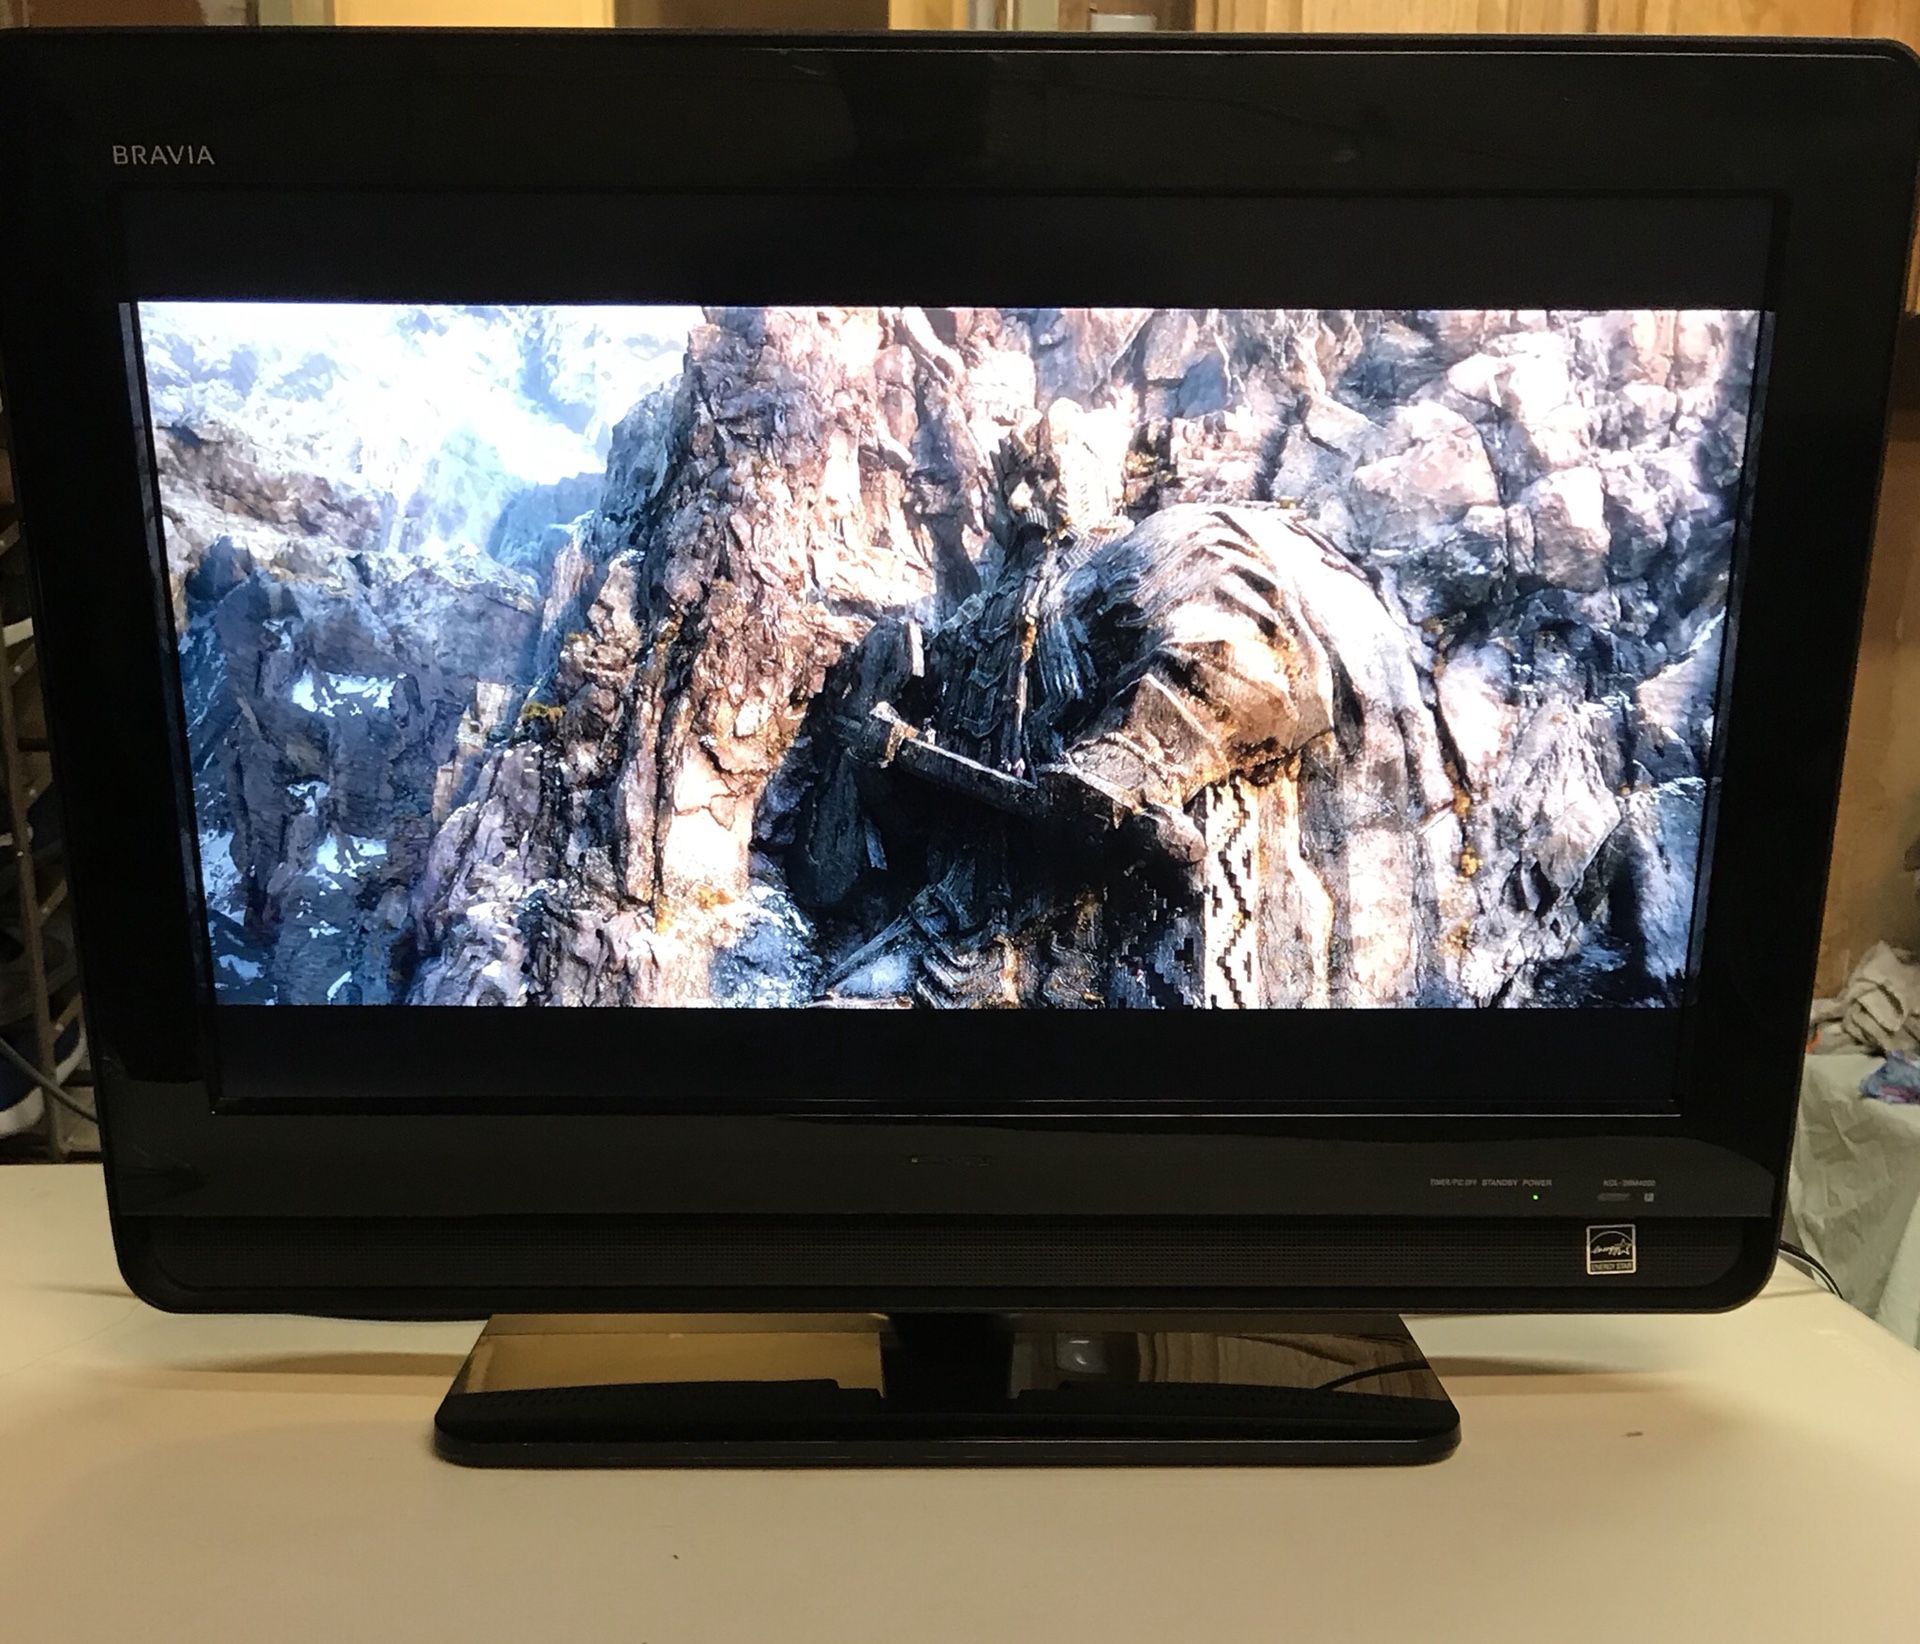 Sony Bravia KDL-26M4000 26" 720p HD LCD TV